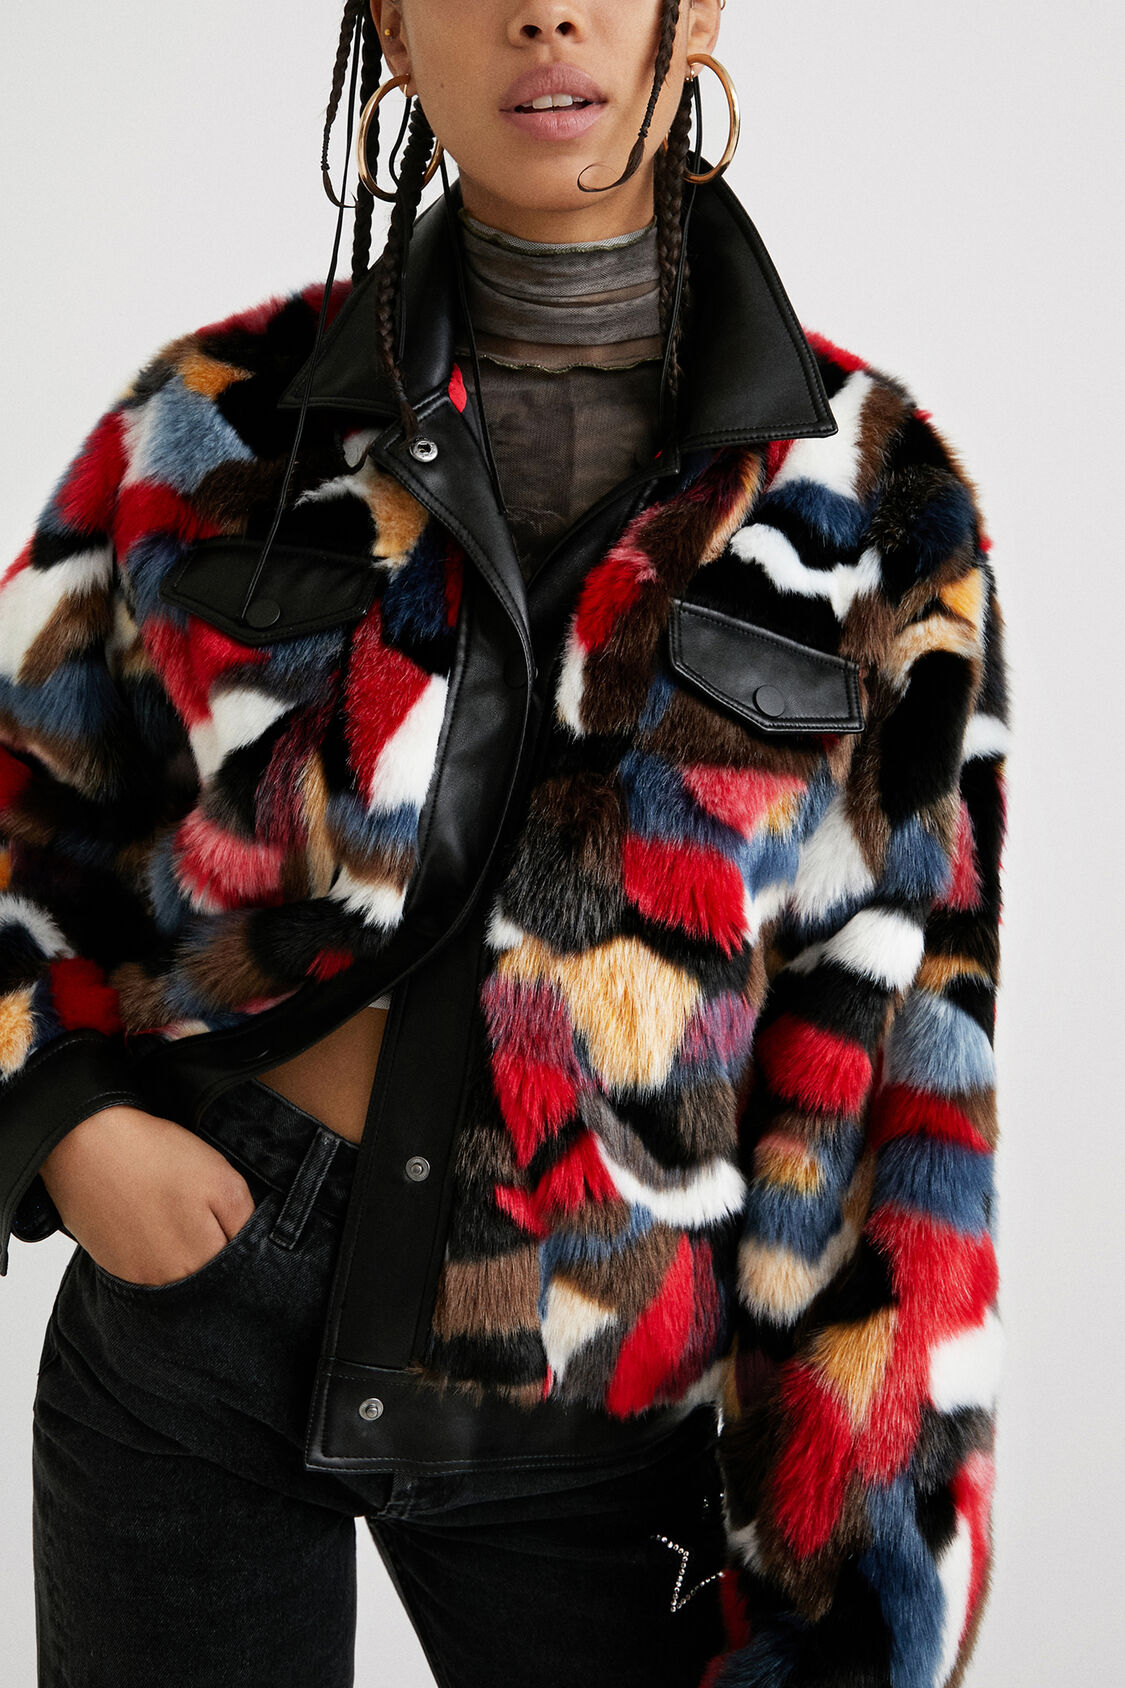 koelkast Onophoudelijk Toestemming Loose fur jacket | Desigual.com